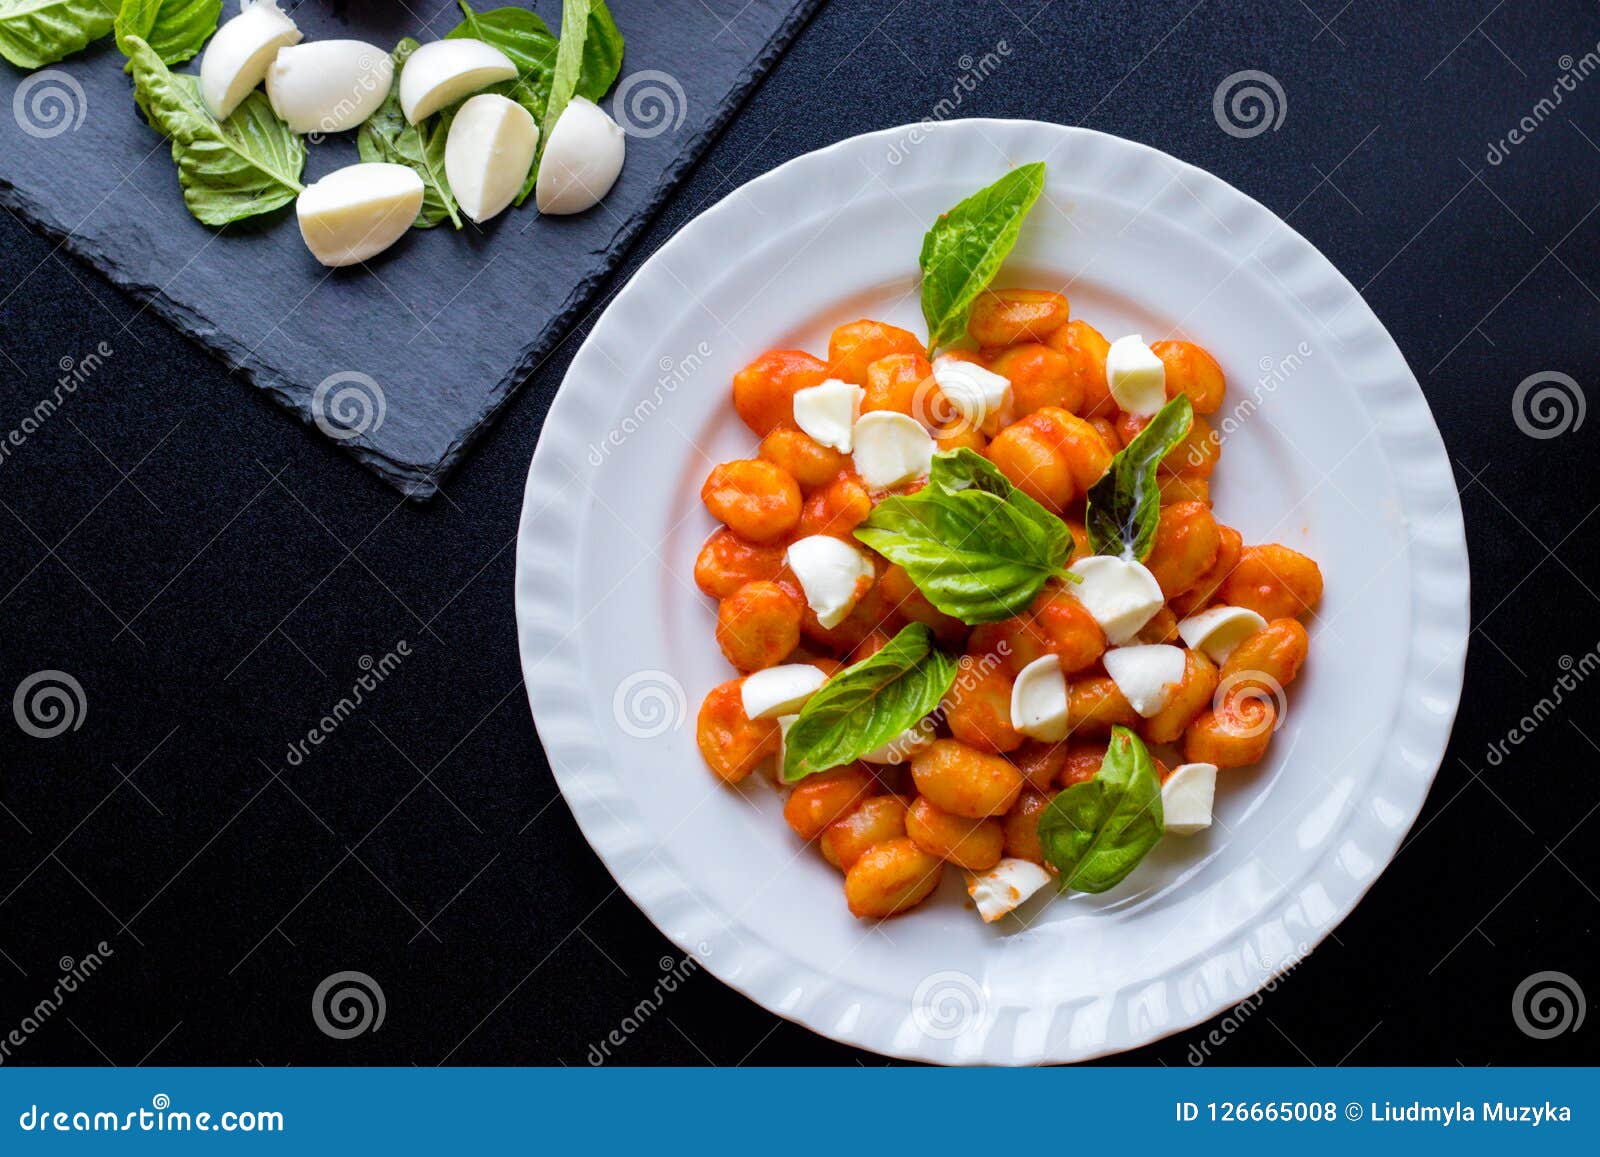 gnocchi alla sorrentina in tomato sauce with green fresh basil and mozzarella balls served on a plate